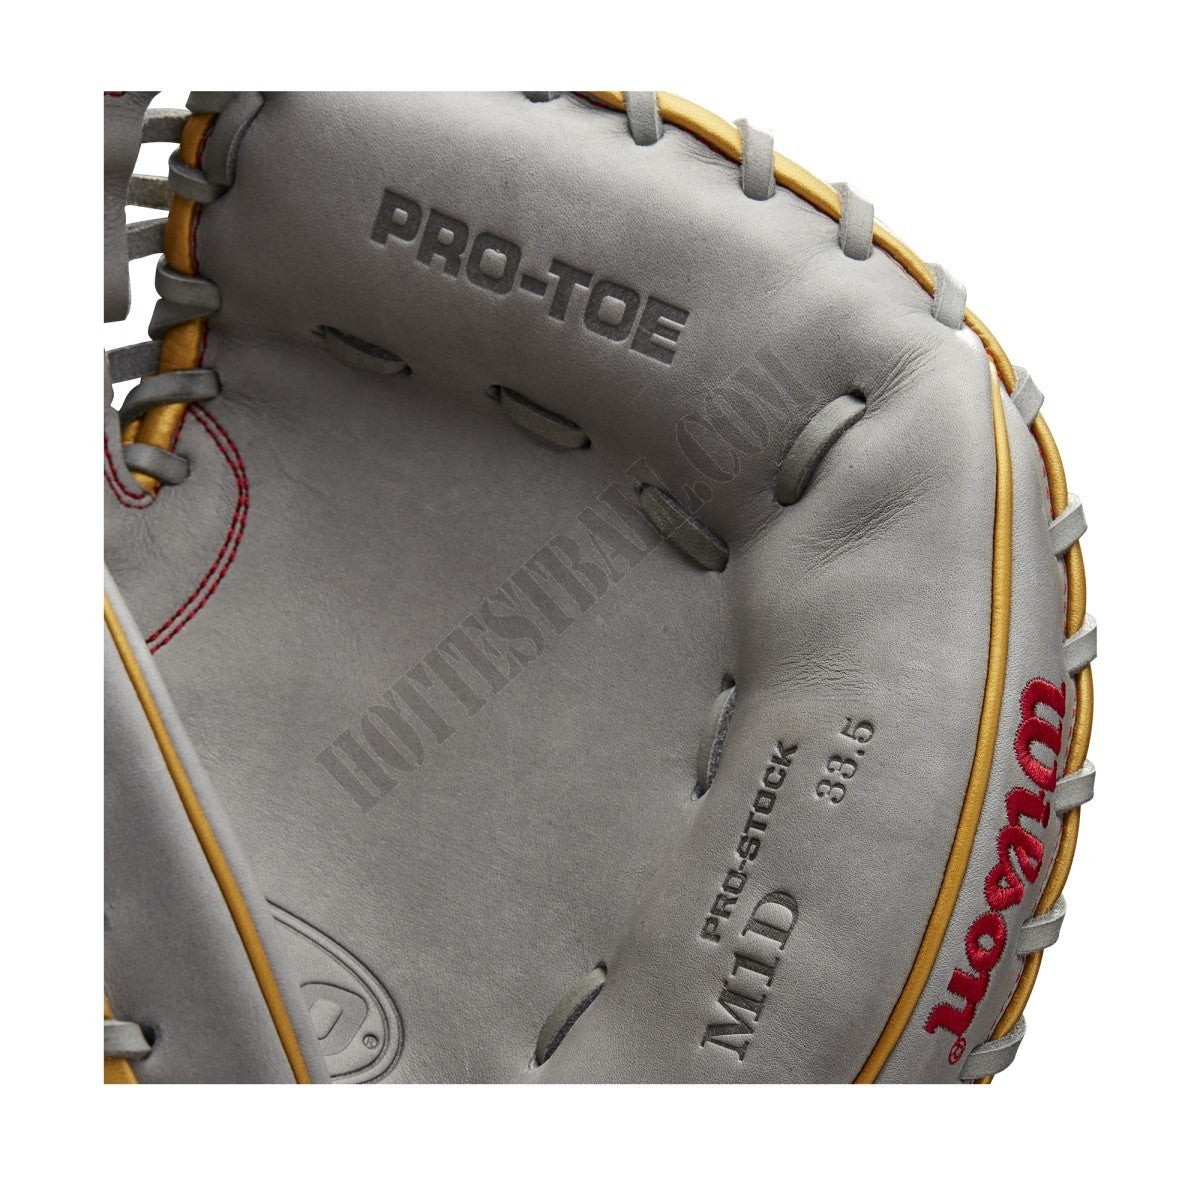 2020 A2000 M1D Catcher's Baseball Mitt - Limited Edition ● Wilson Promotions - -7